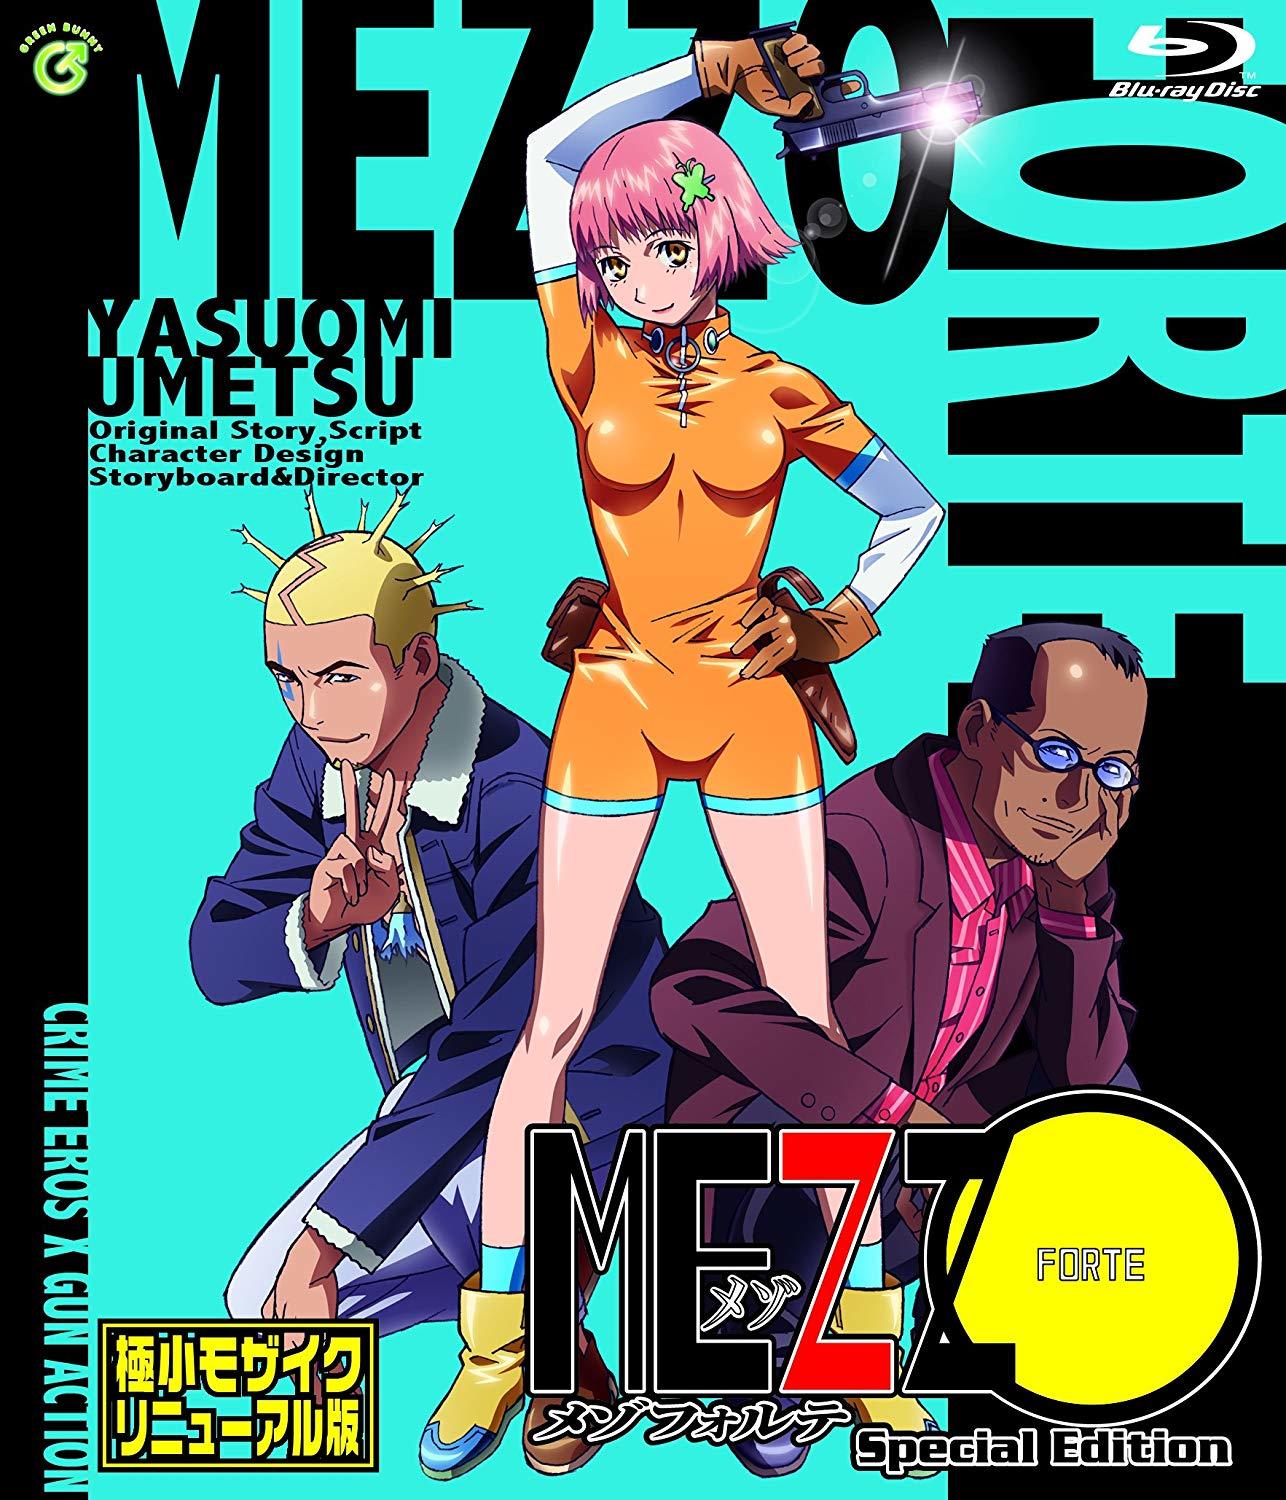 MEZZO FORTE International Version MEZZO FORTE vol.1 2 - DVD